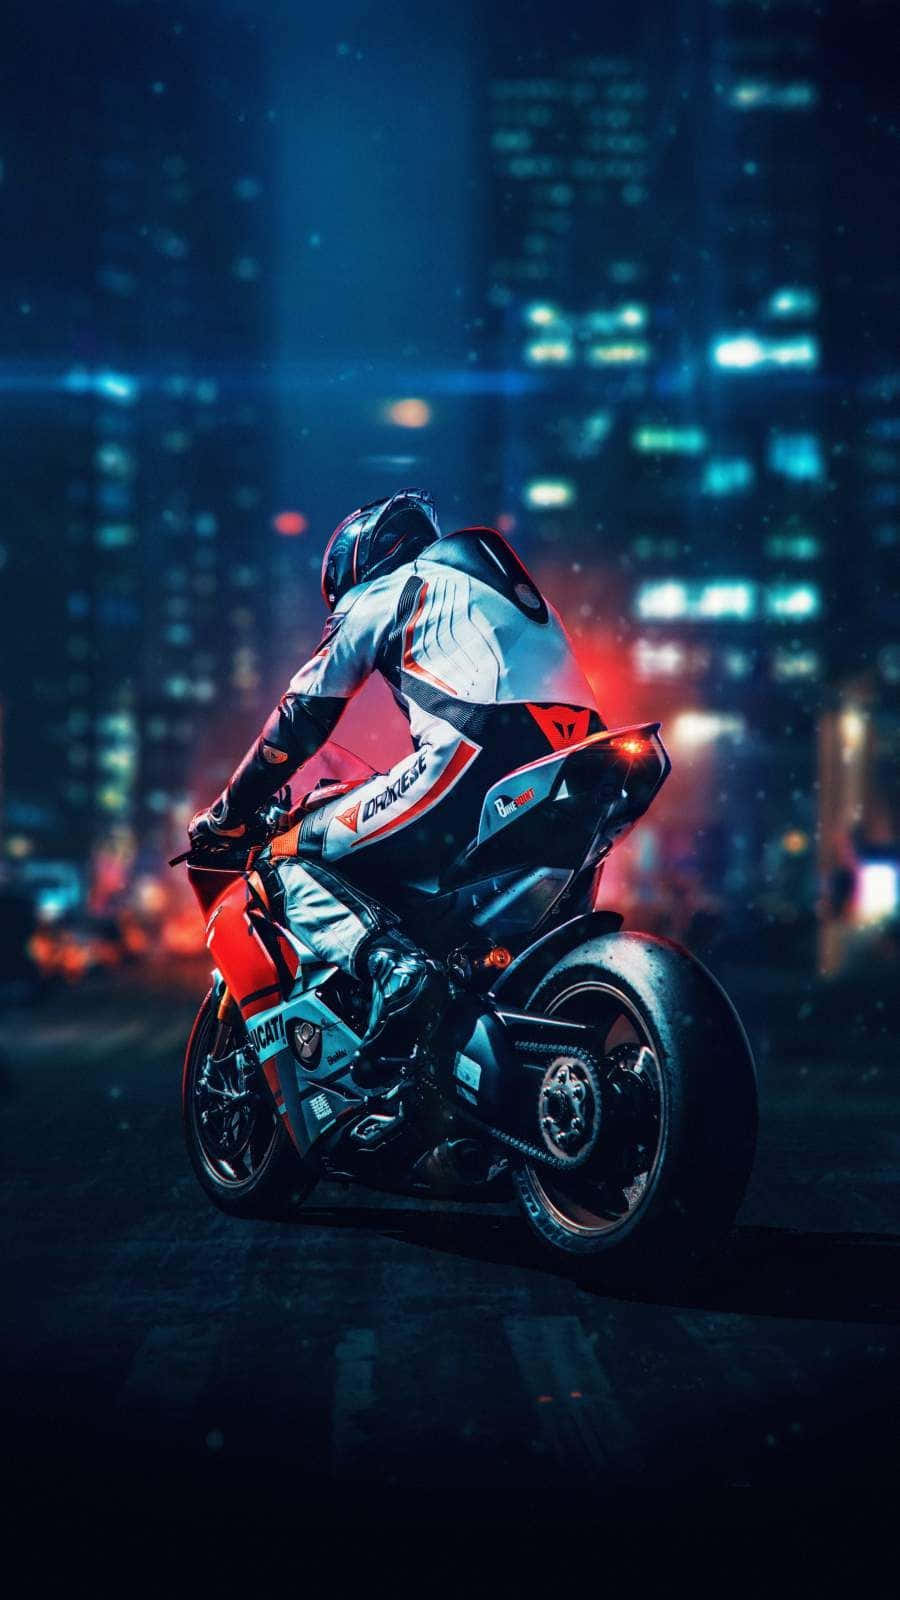 Superbike Rider Picture